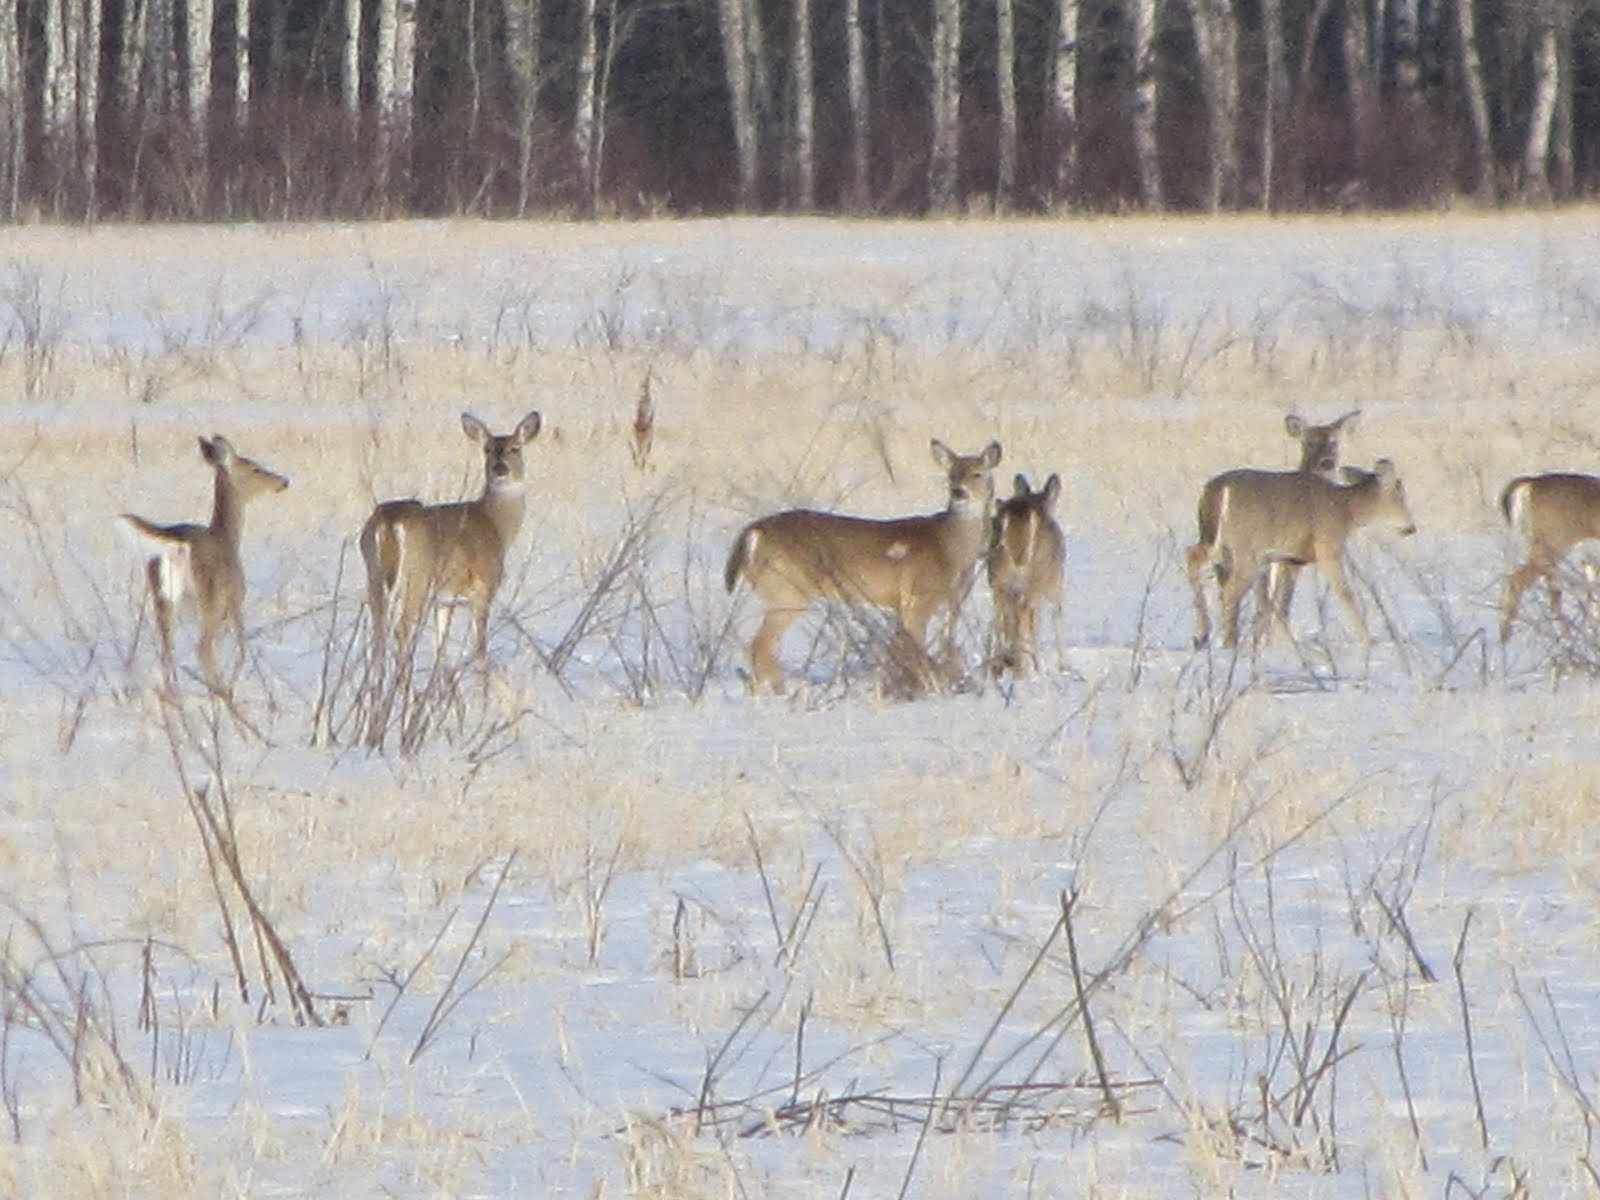 Deer had a rough winter in Minnesota.